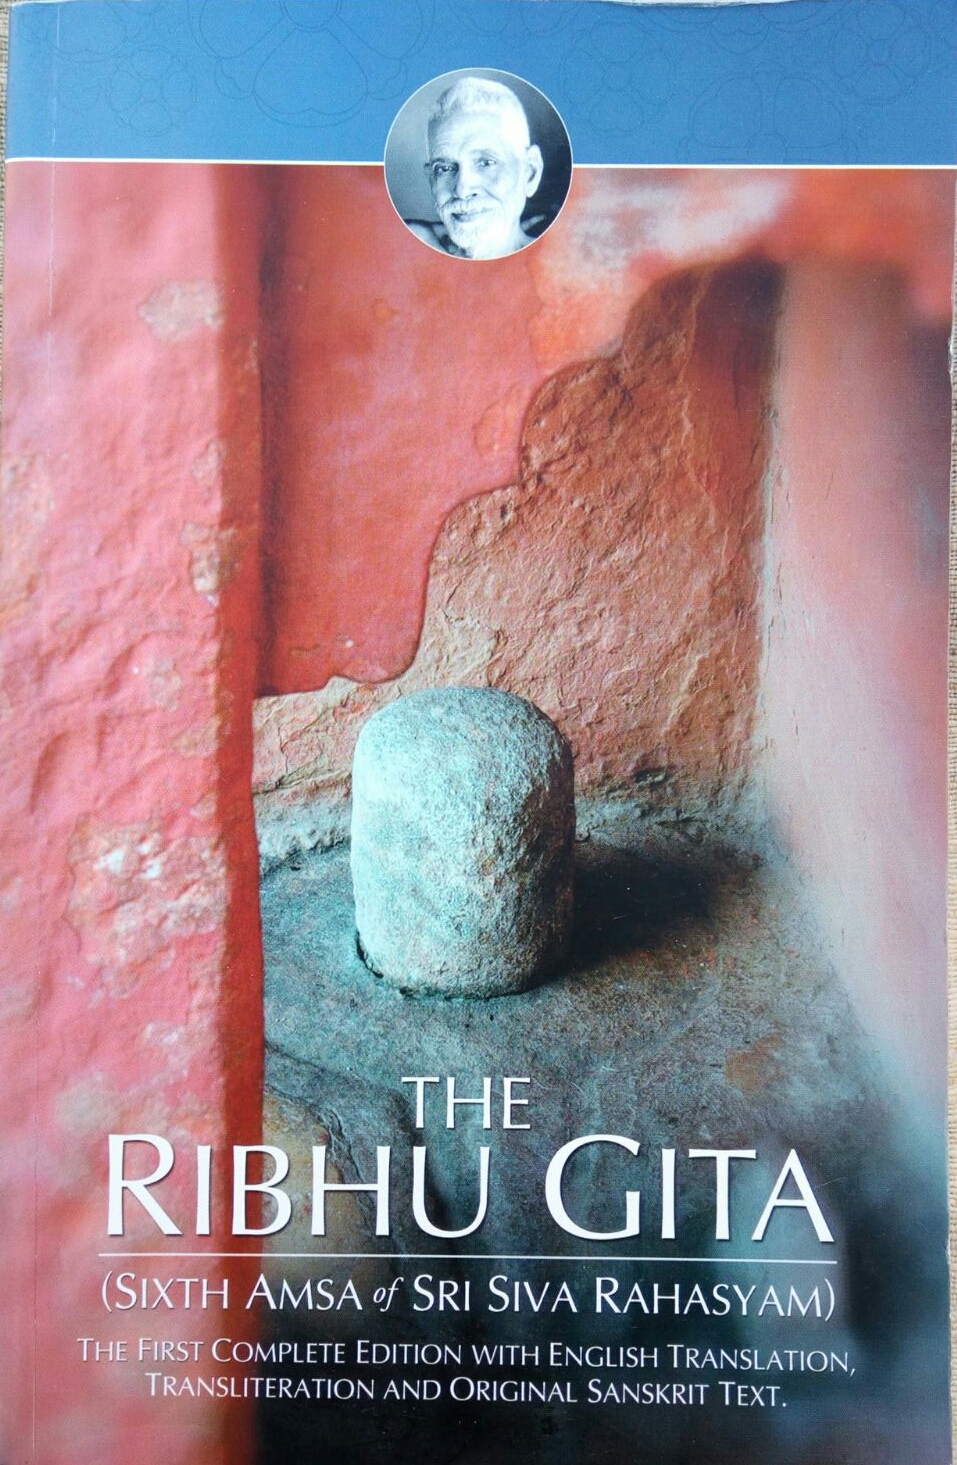 Shirdi Sai Baba Temple Frankfurt Germany (Deutschland) recommended book - Ribhu Gita .